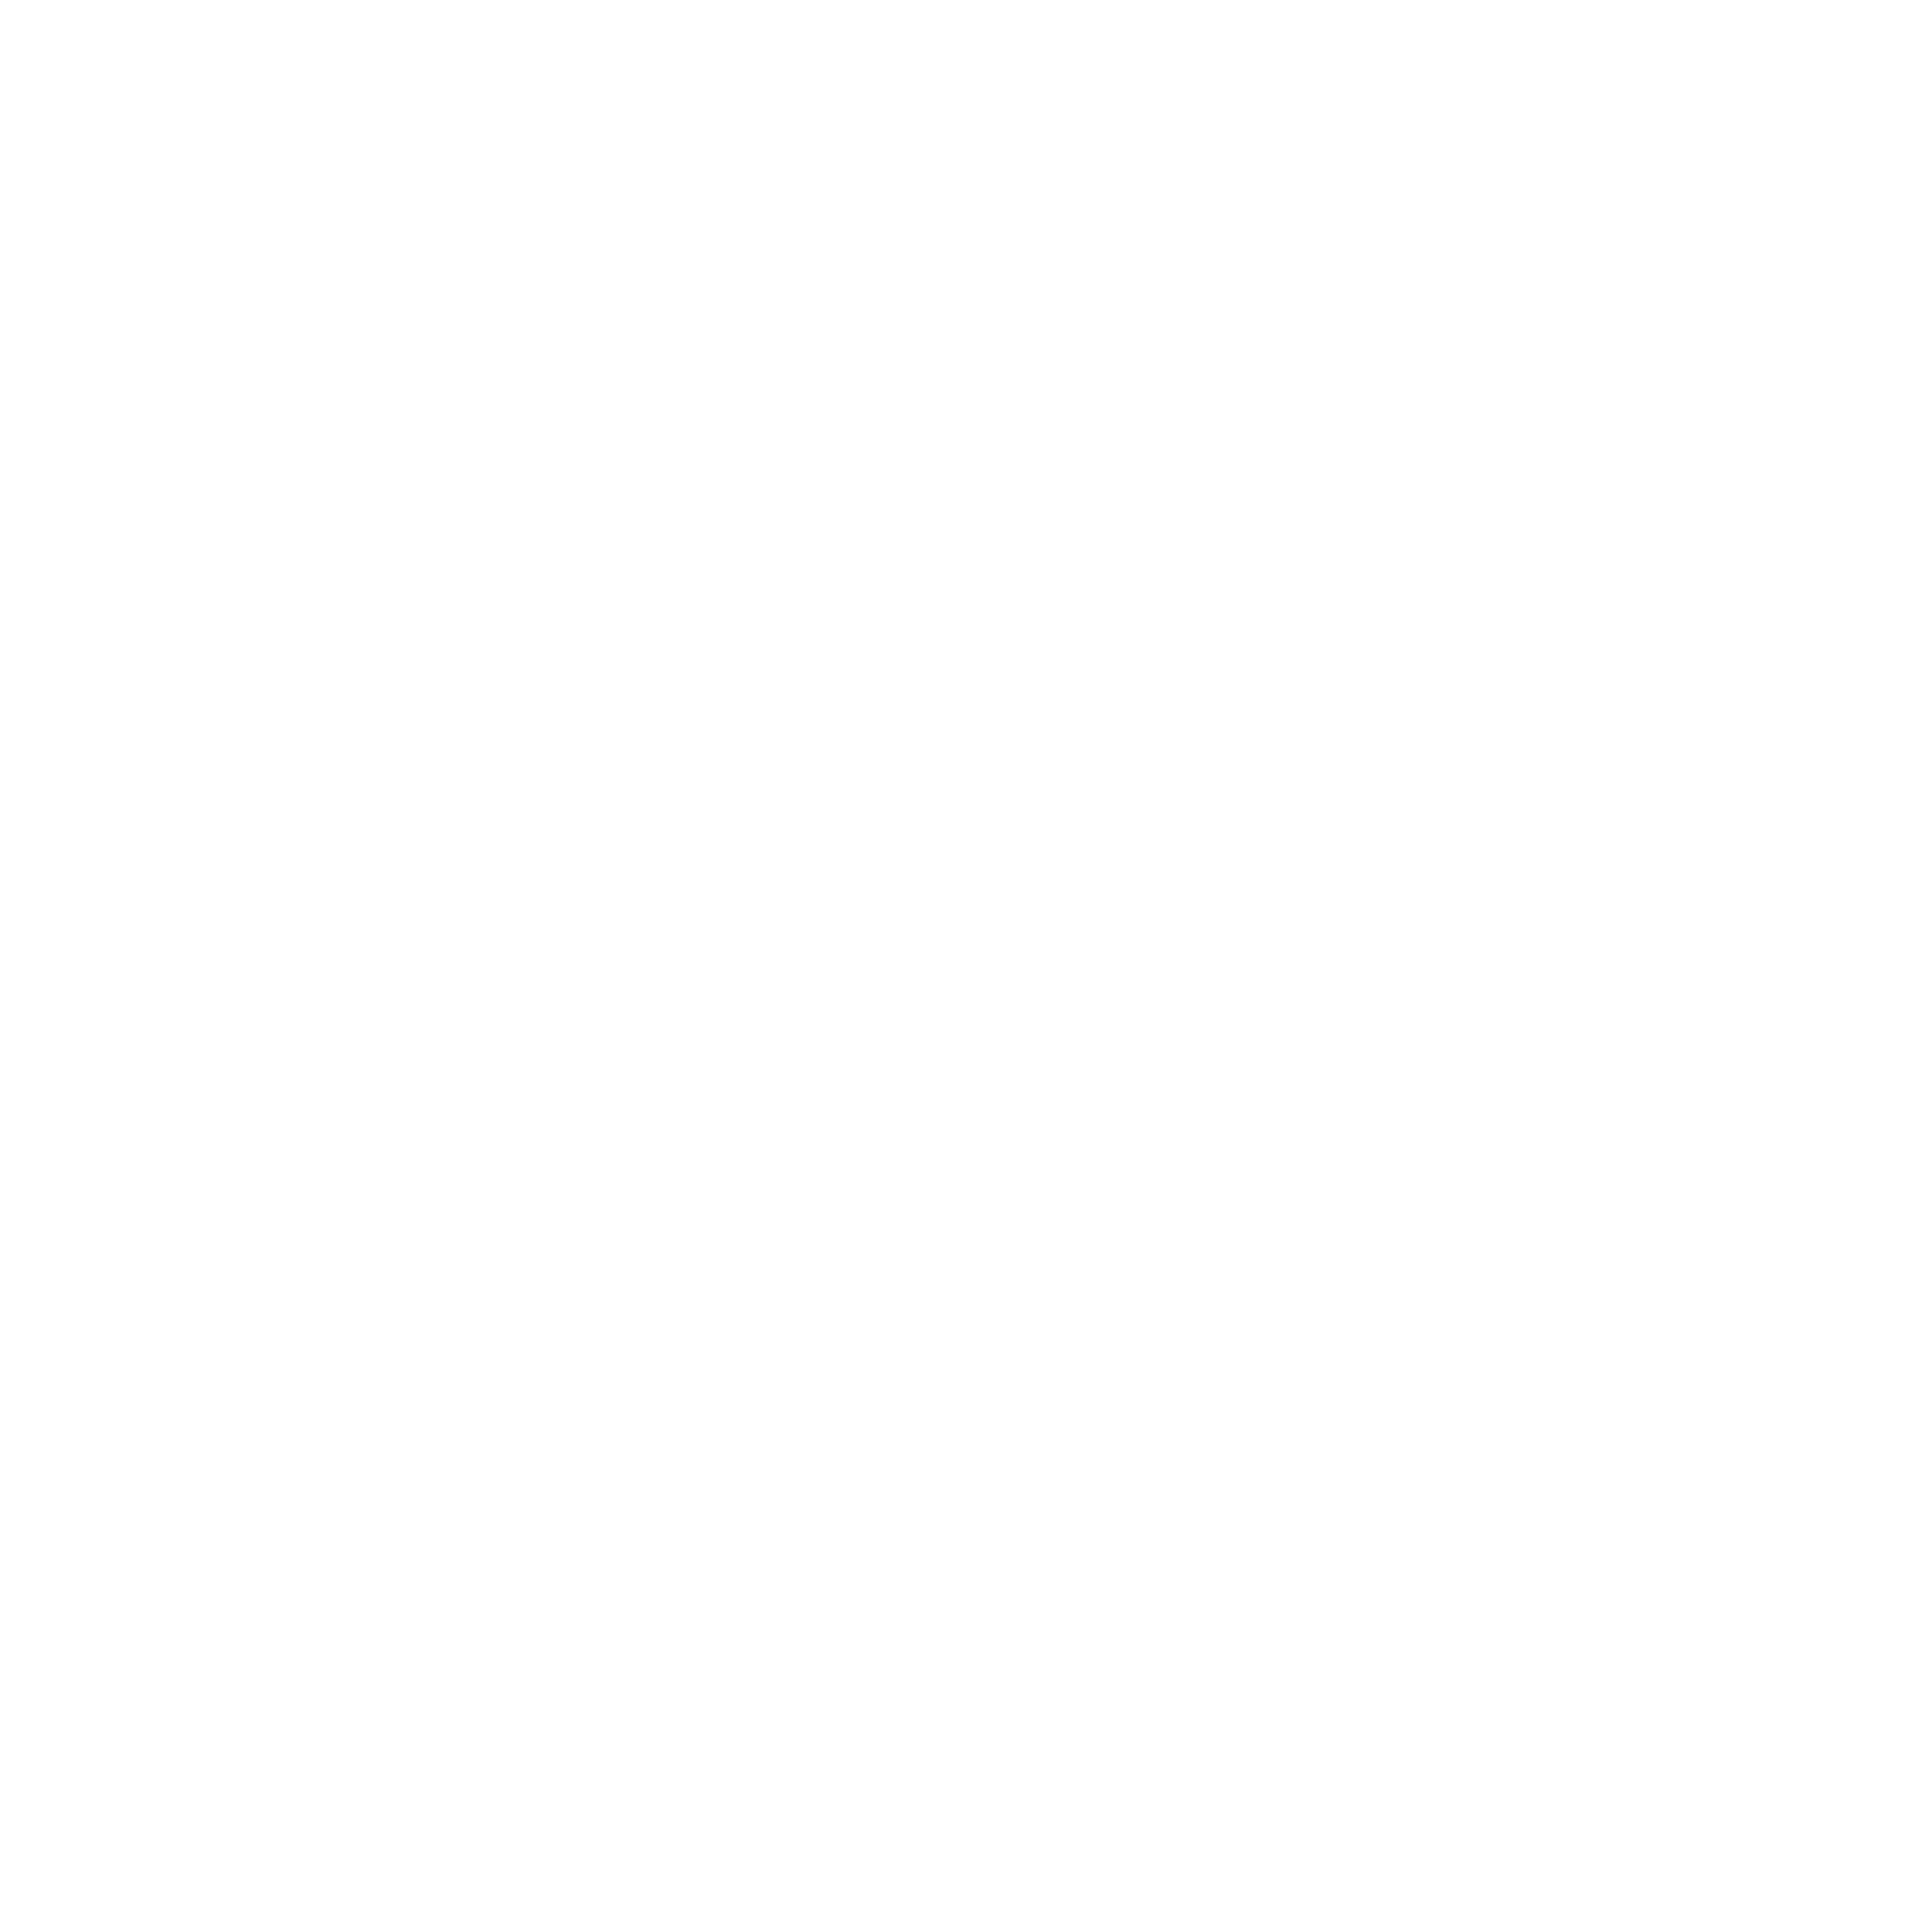 Unesco logo black and white